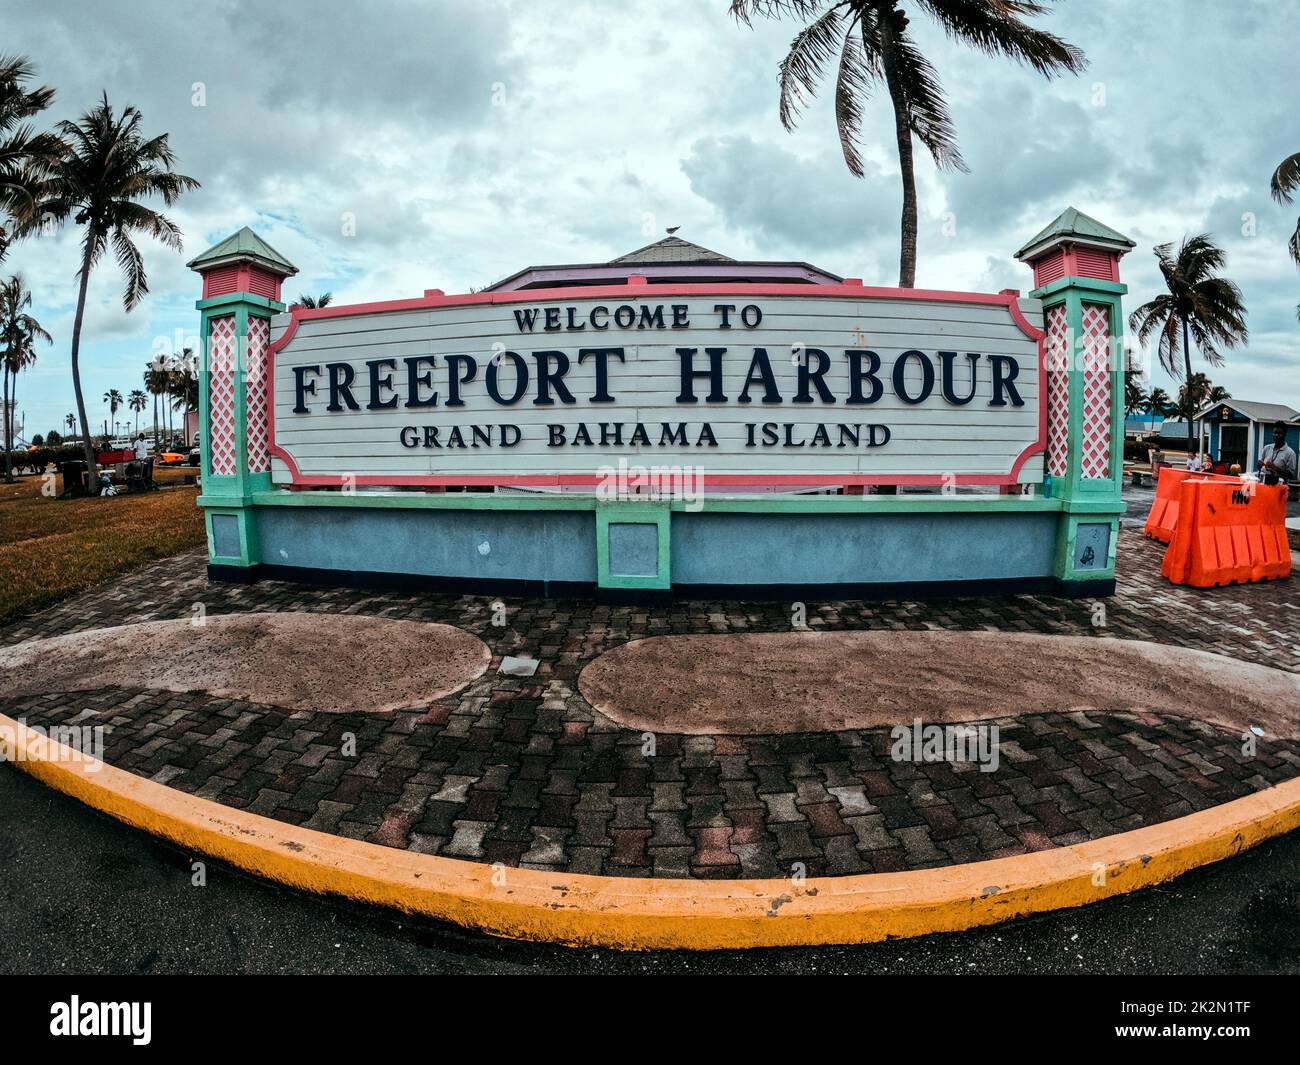 FREEPORT, GRAND BAHAMA ISLAND - 29. APRIL 2022: Ein Schild begrüßt Touristen im Freeport Harbour auf der Grand Bahama Island. Stockfoto